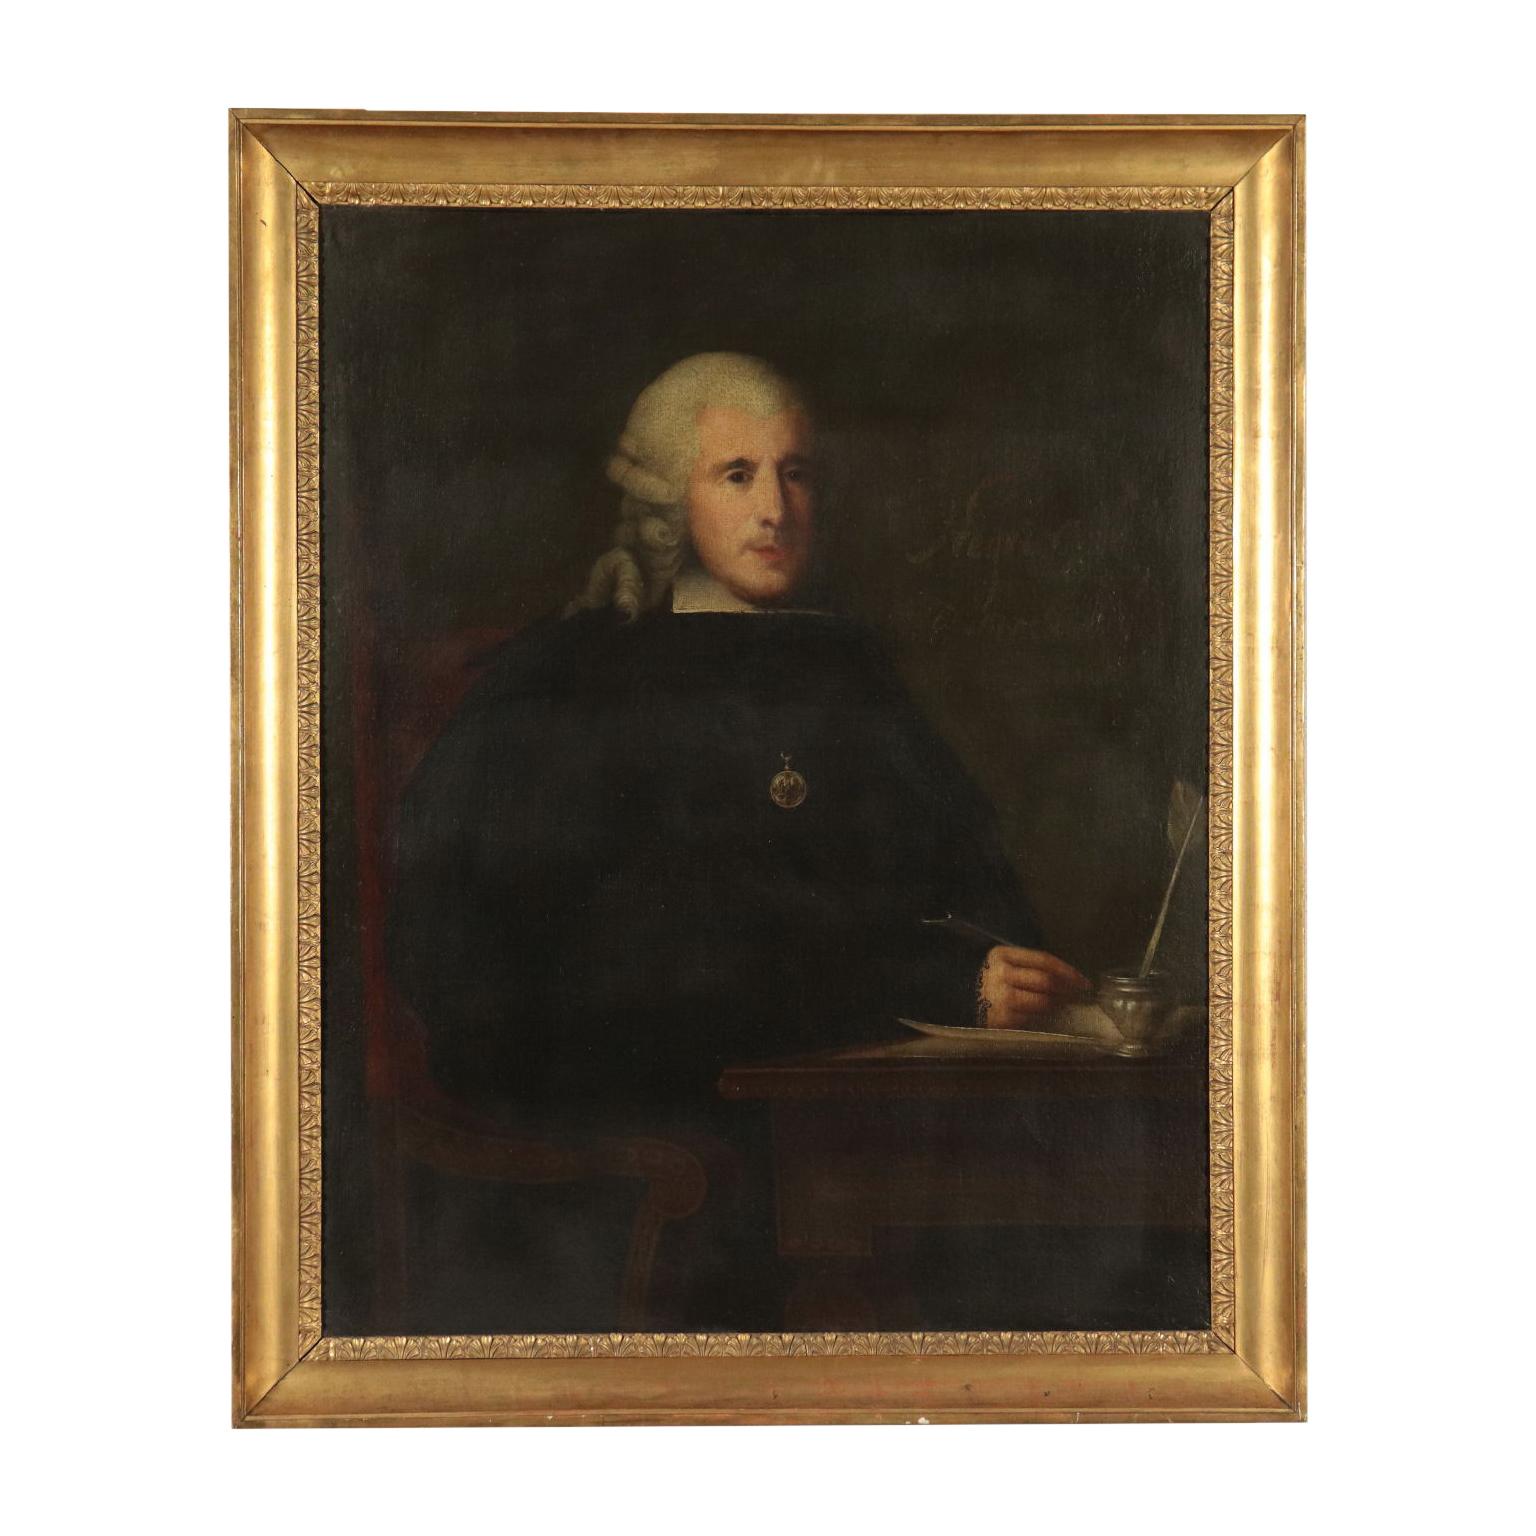 Unknown Portrait Painting - Portrait Of A Man Oil On Canvas 18th Century